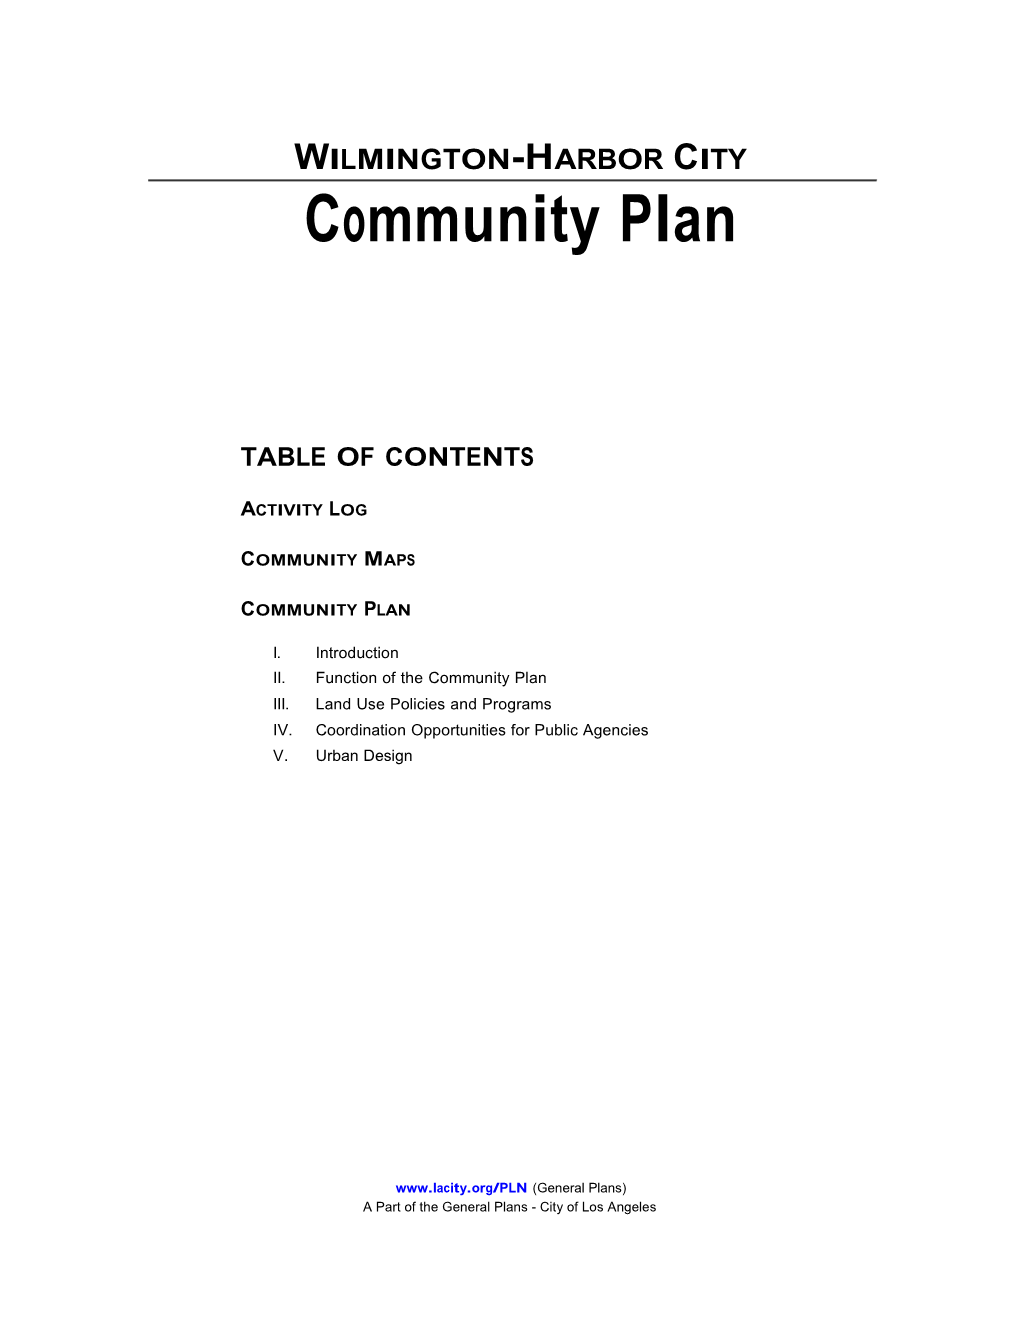 Wilmington-Harbor City Community Plan Update 97–0050 CPU 98-1619